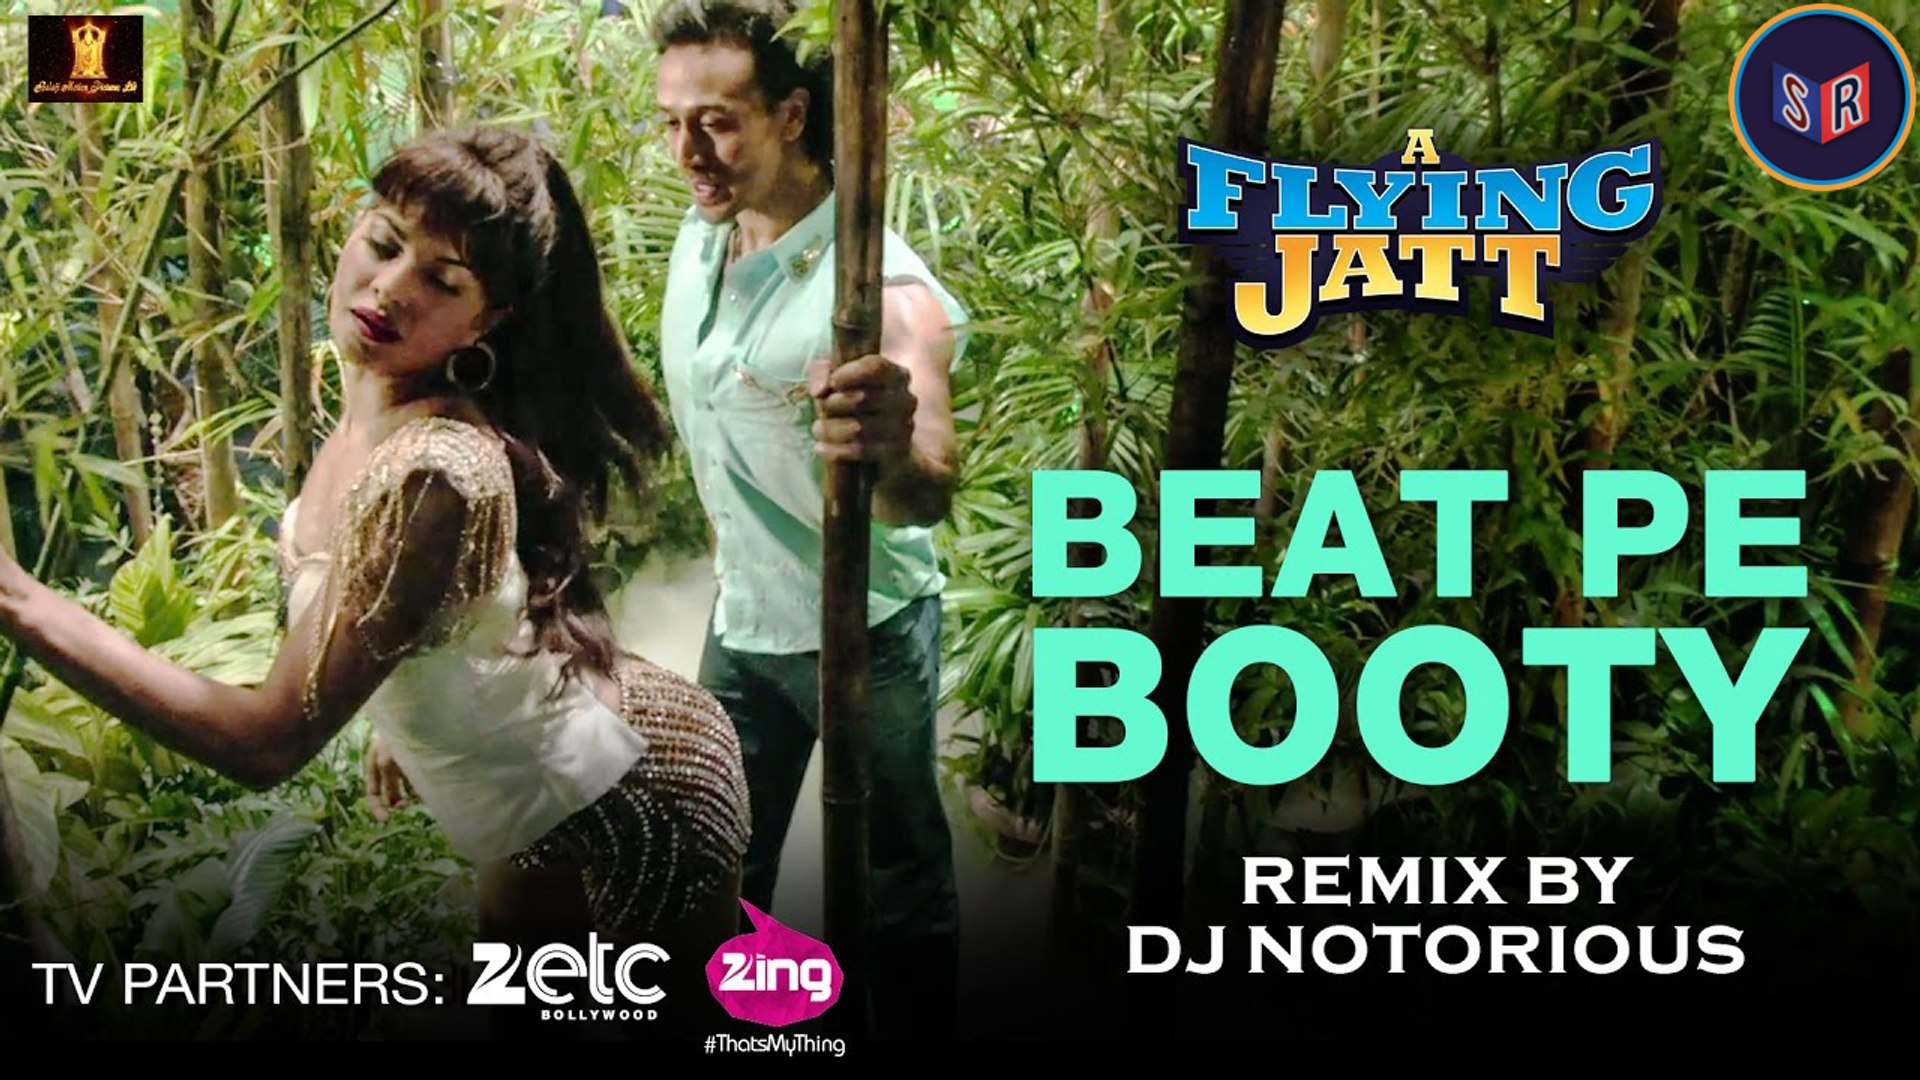 Beat Pe Booty Remix - DJ Notorious - A Flying Jatt [2016] FT. Tiger Shroff  & Jacqueline Fernandez [FULL HD] - (SULEMAN - RECORD) - video Dailymotion